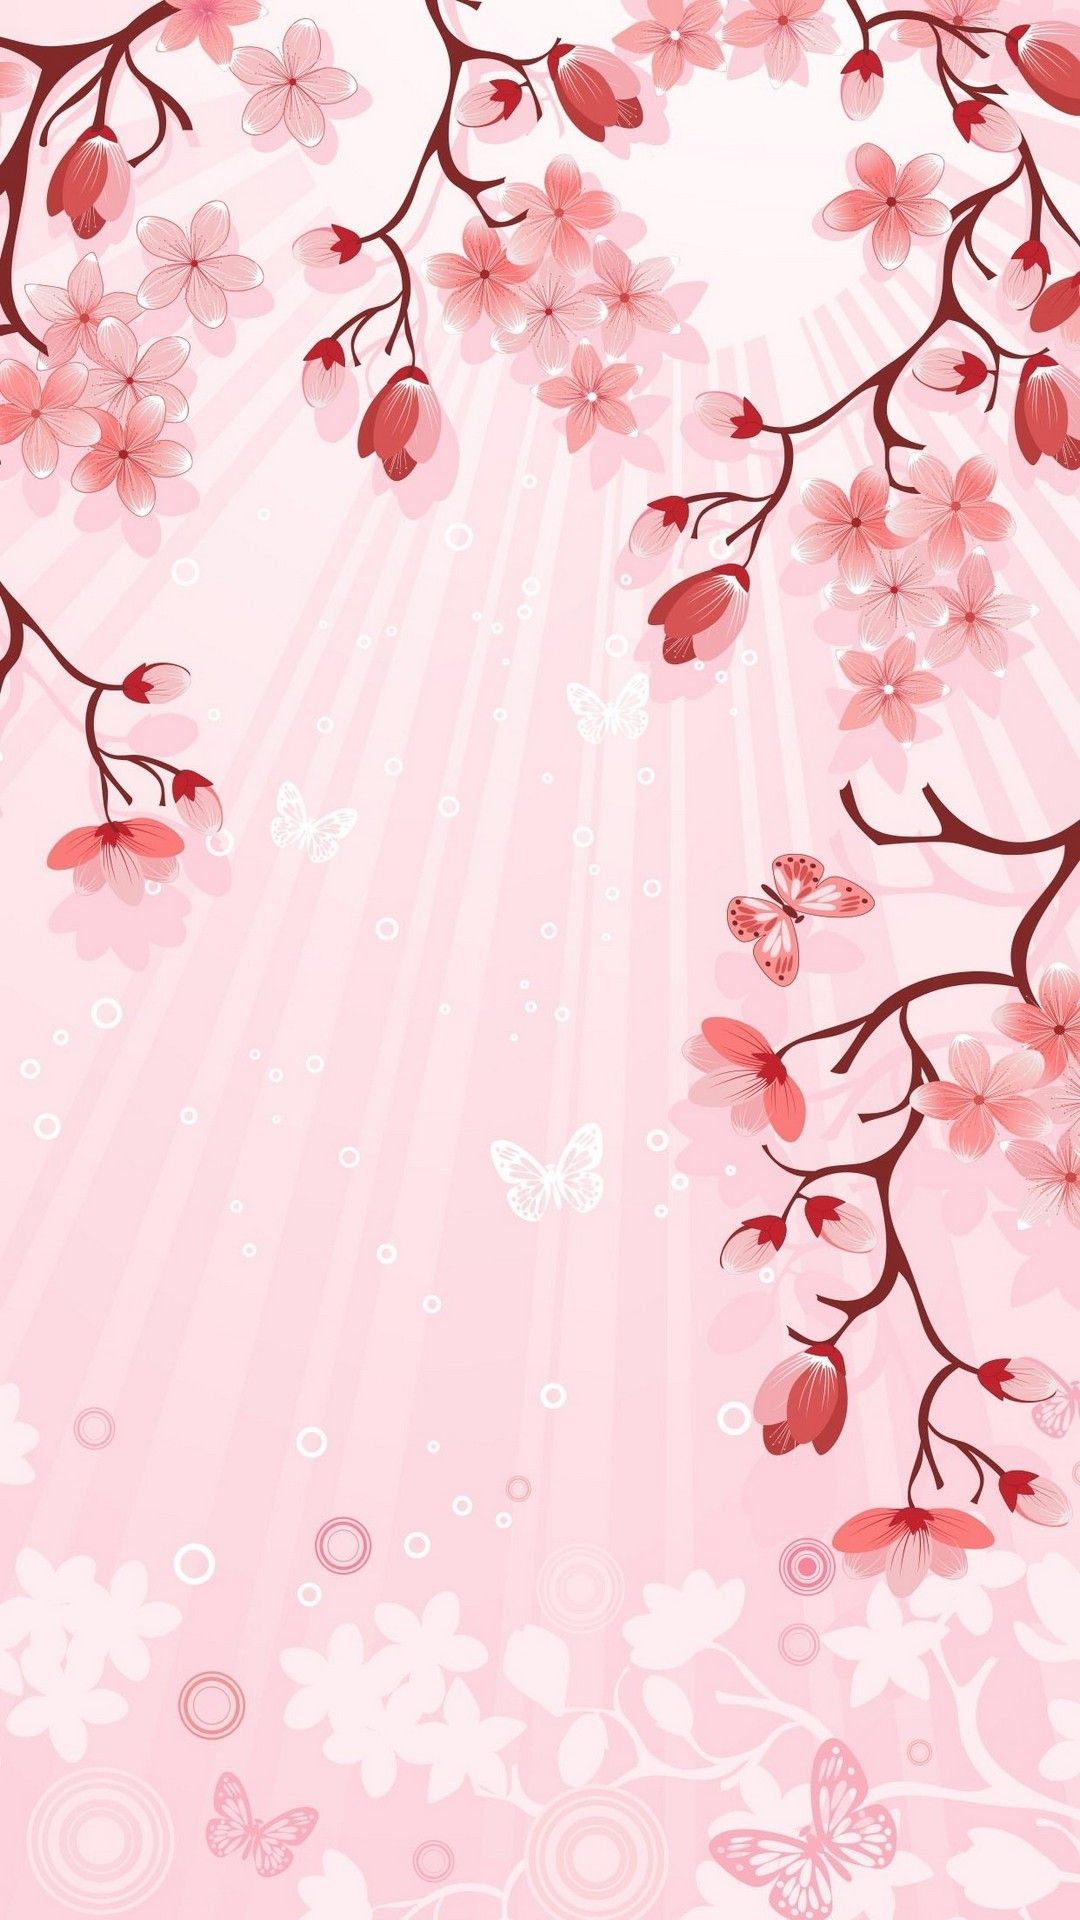 Pink Flower Wallpaper Animated. Best HD Wallpaper. Pink flowers wallpaper, Flower wallpaper, Cute flower wallpaper